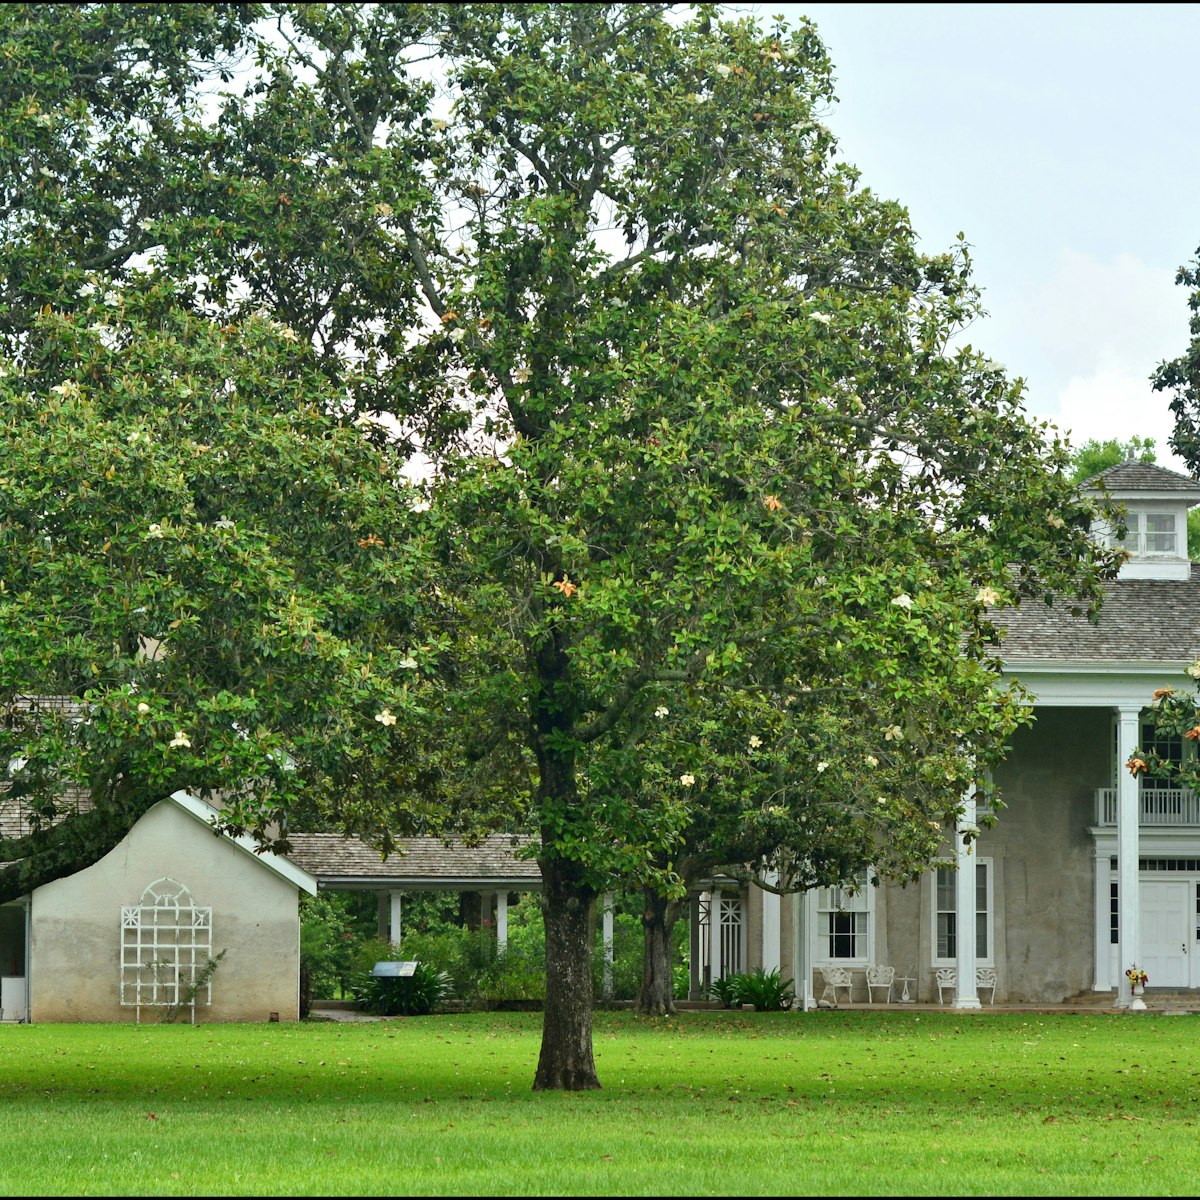 Varner-Hogg Plantation Home in Texas.